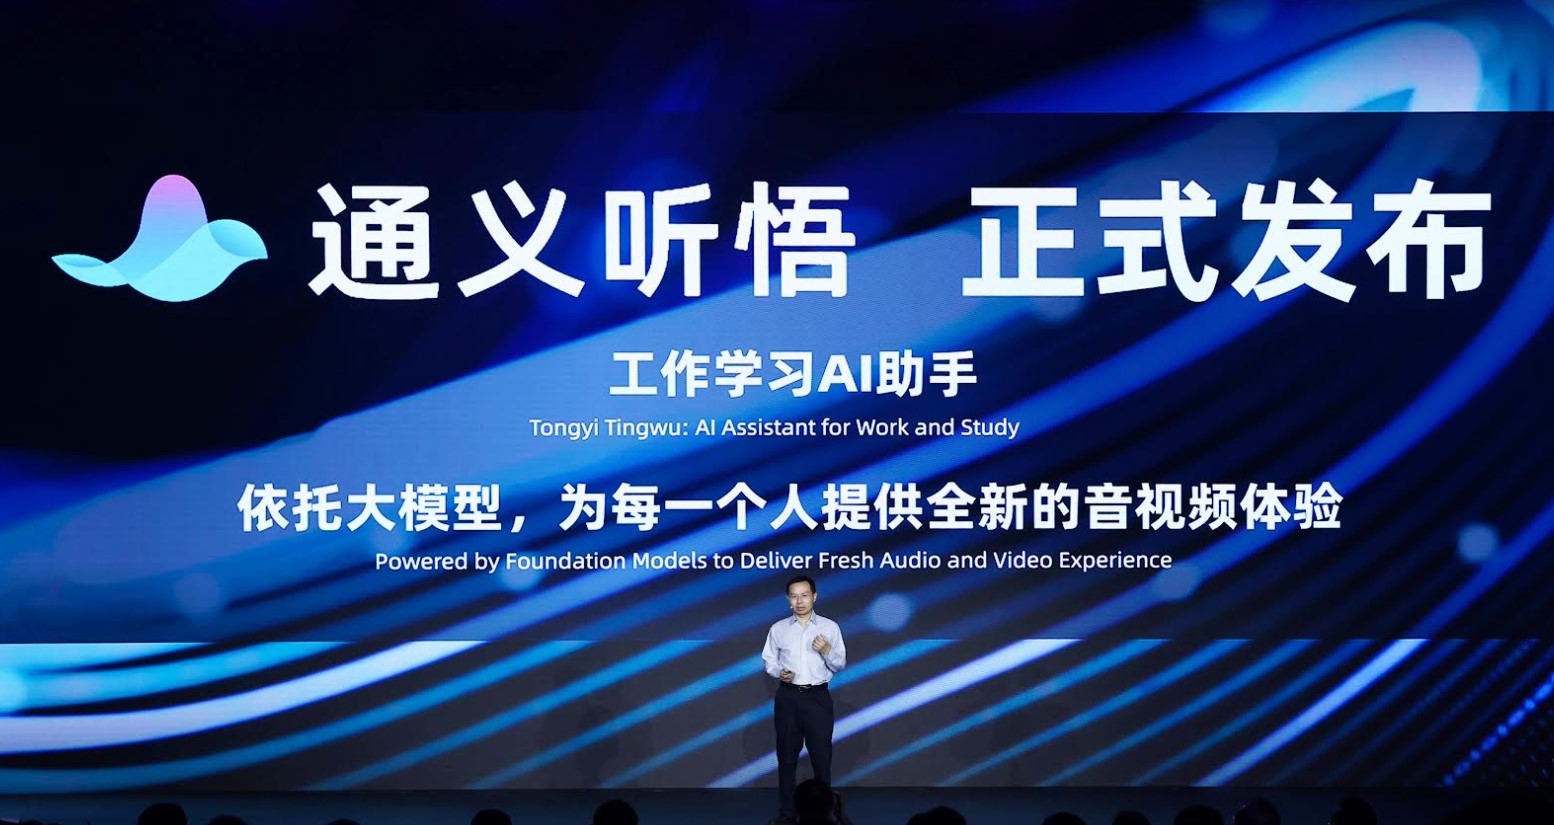 Tingkatkan Produktivitas, Alibaba Cloud Integrasikan Tongyi Qianwen ke dalam Asisten AI